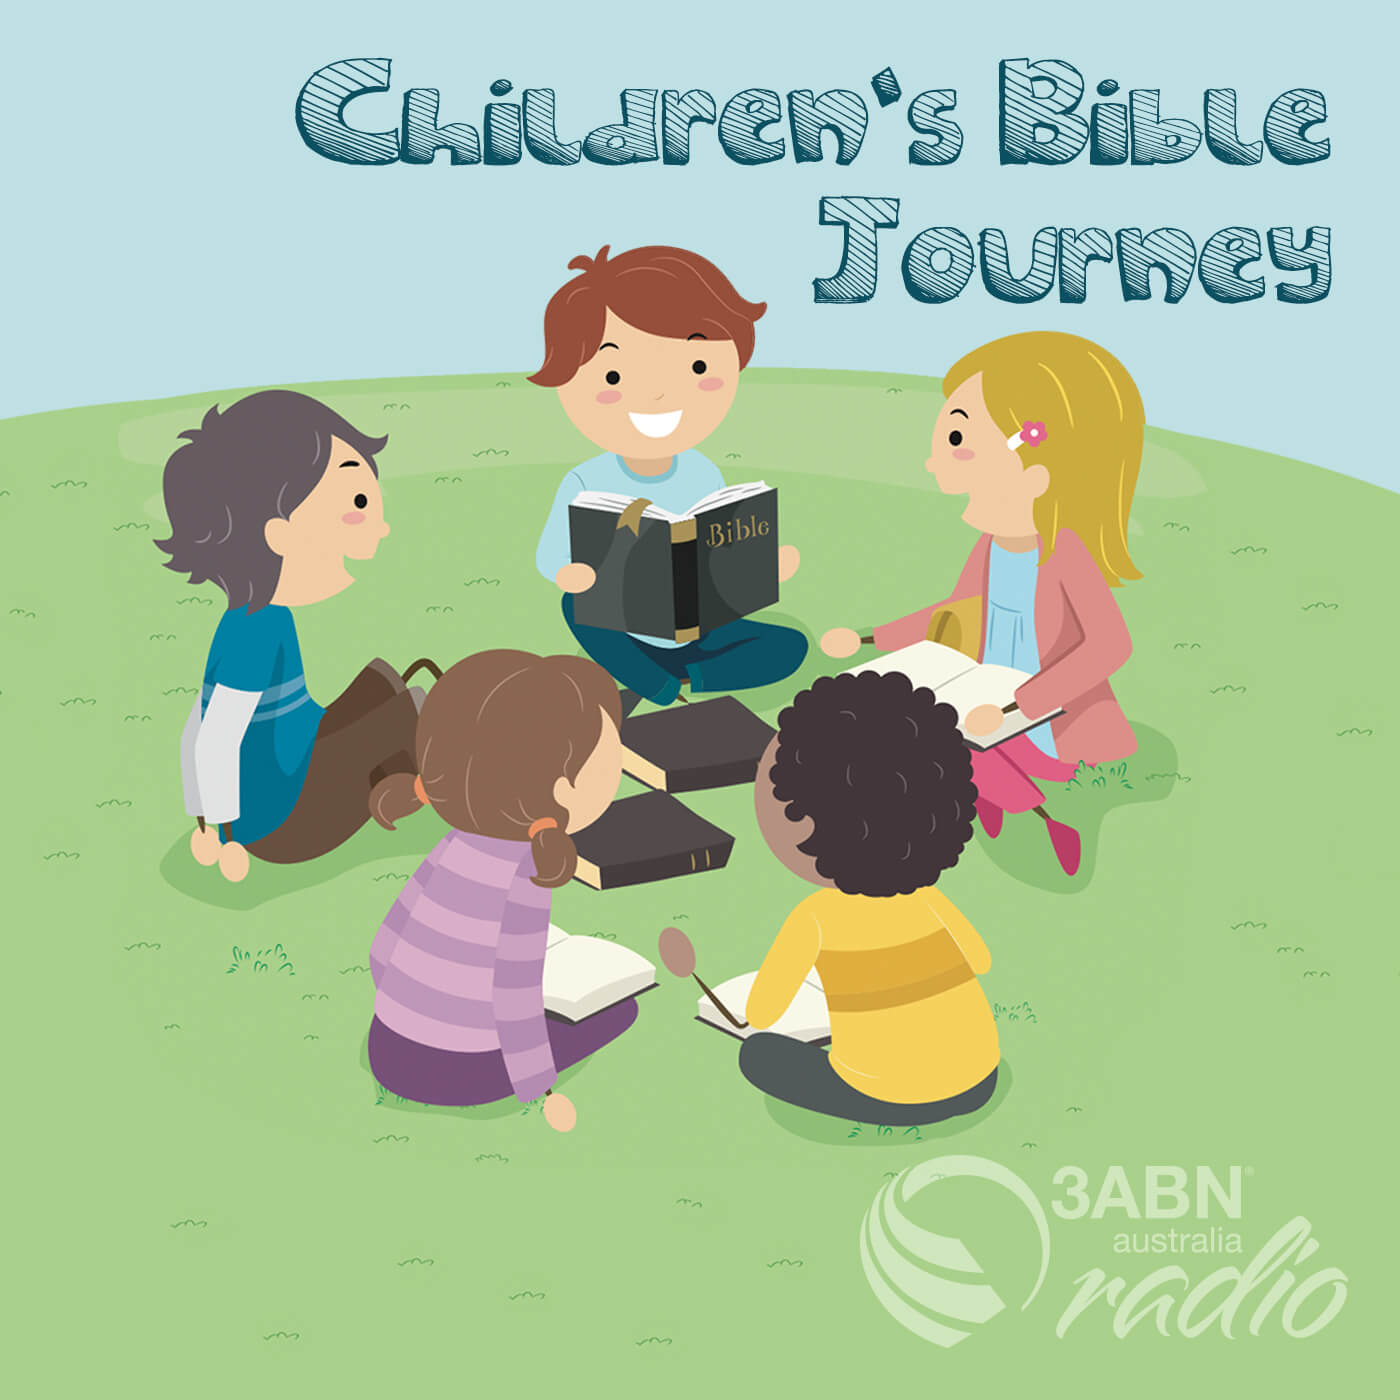 Children's Bible Journey - 2128